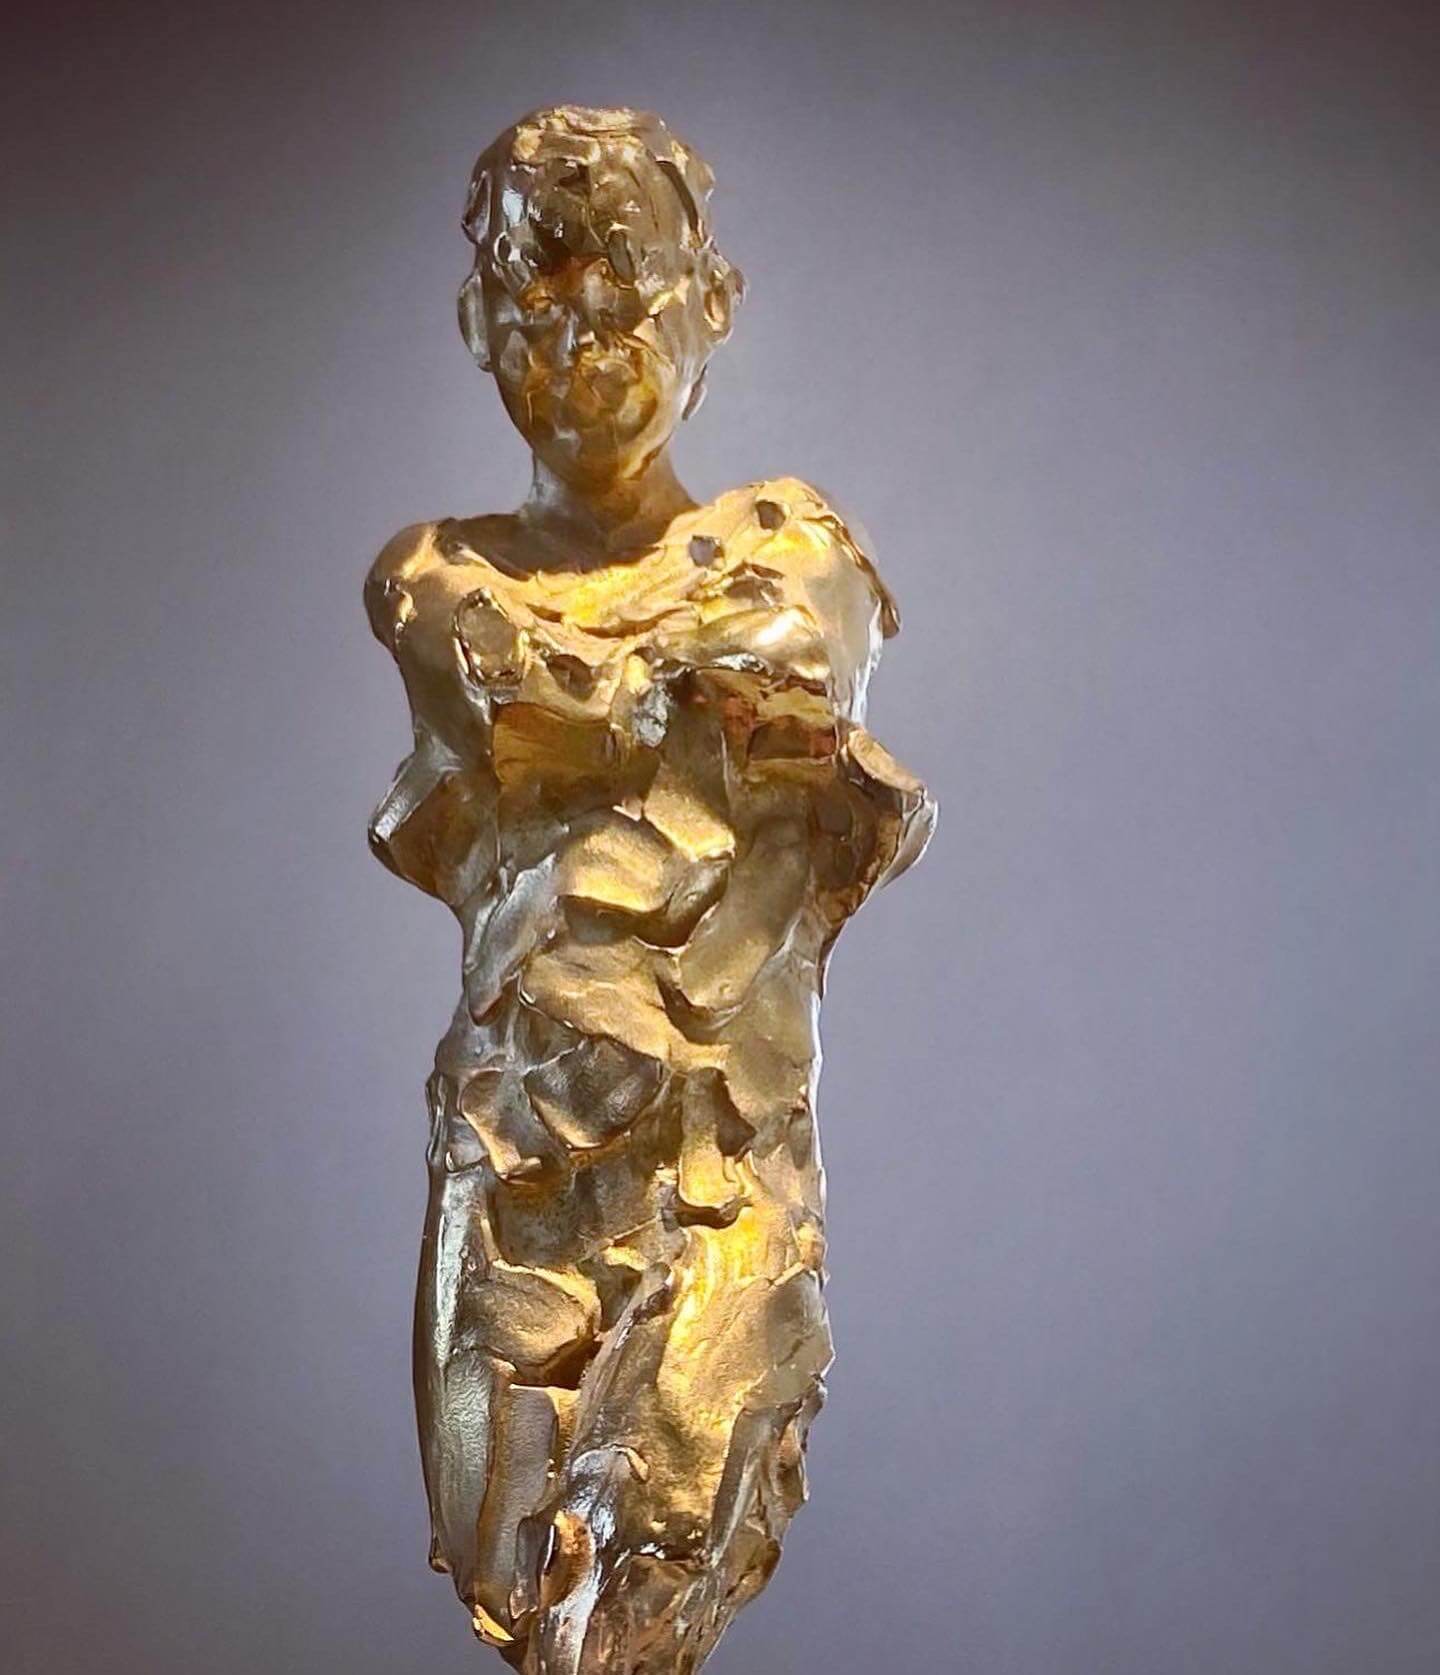 029B-catherine thiry sculpture gold plated bronze belgian artist contemporarysculptore